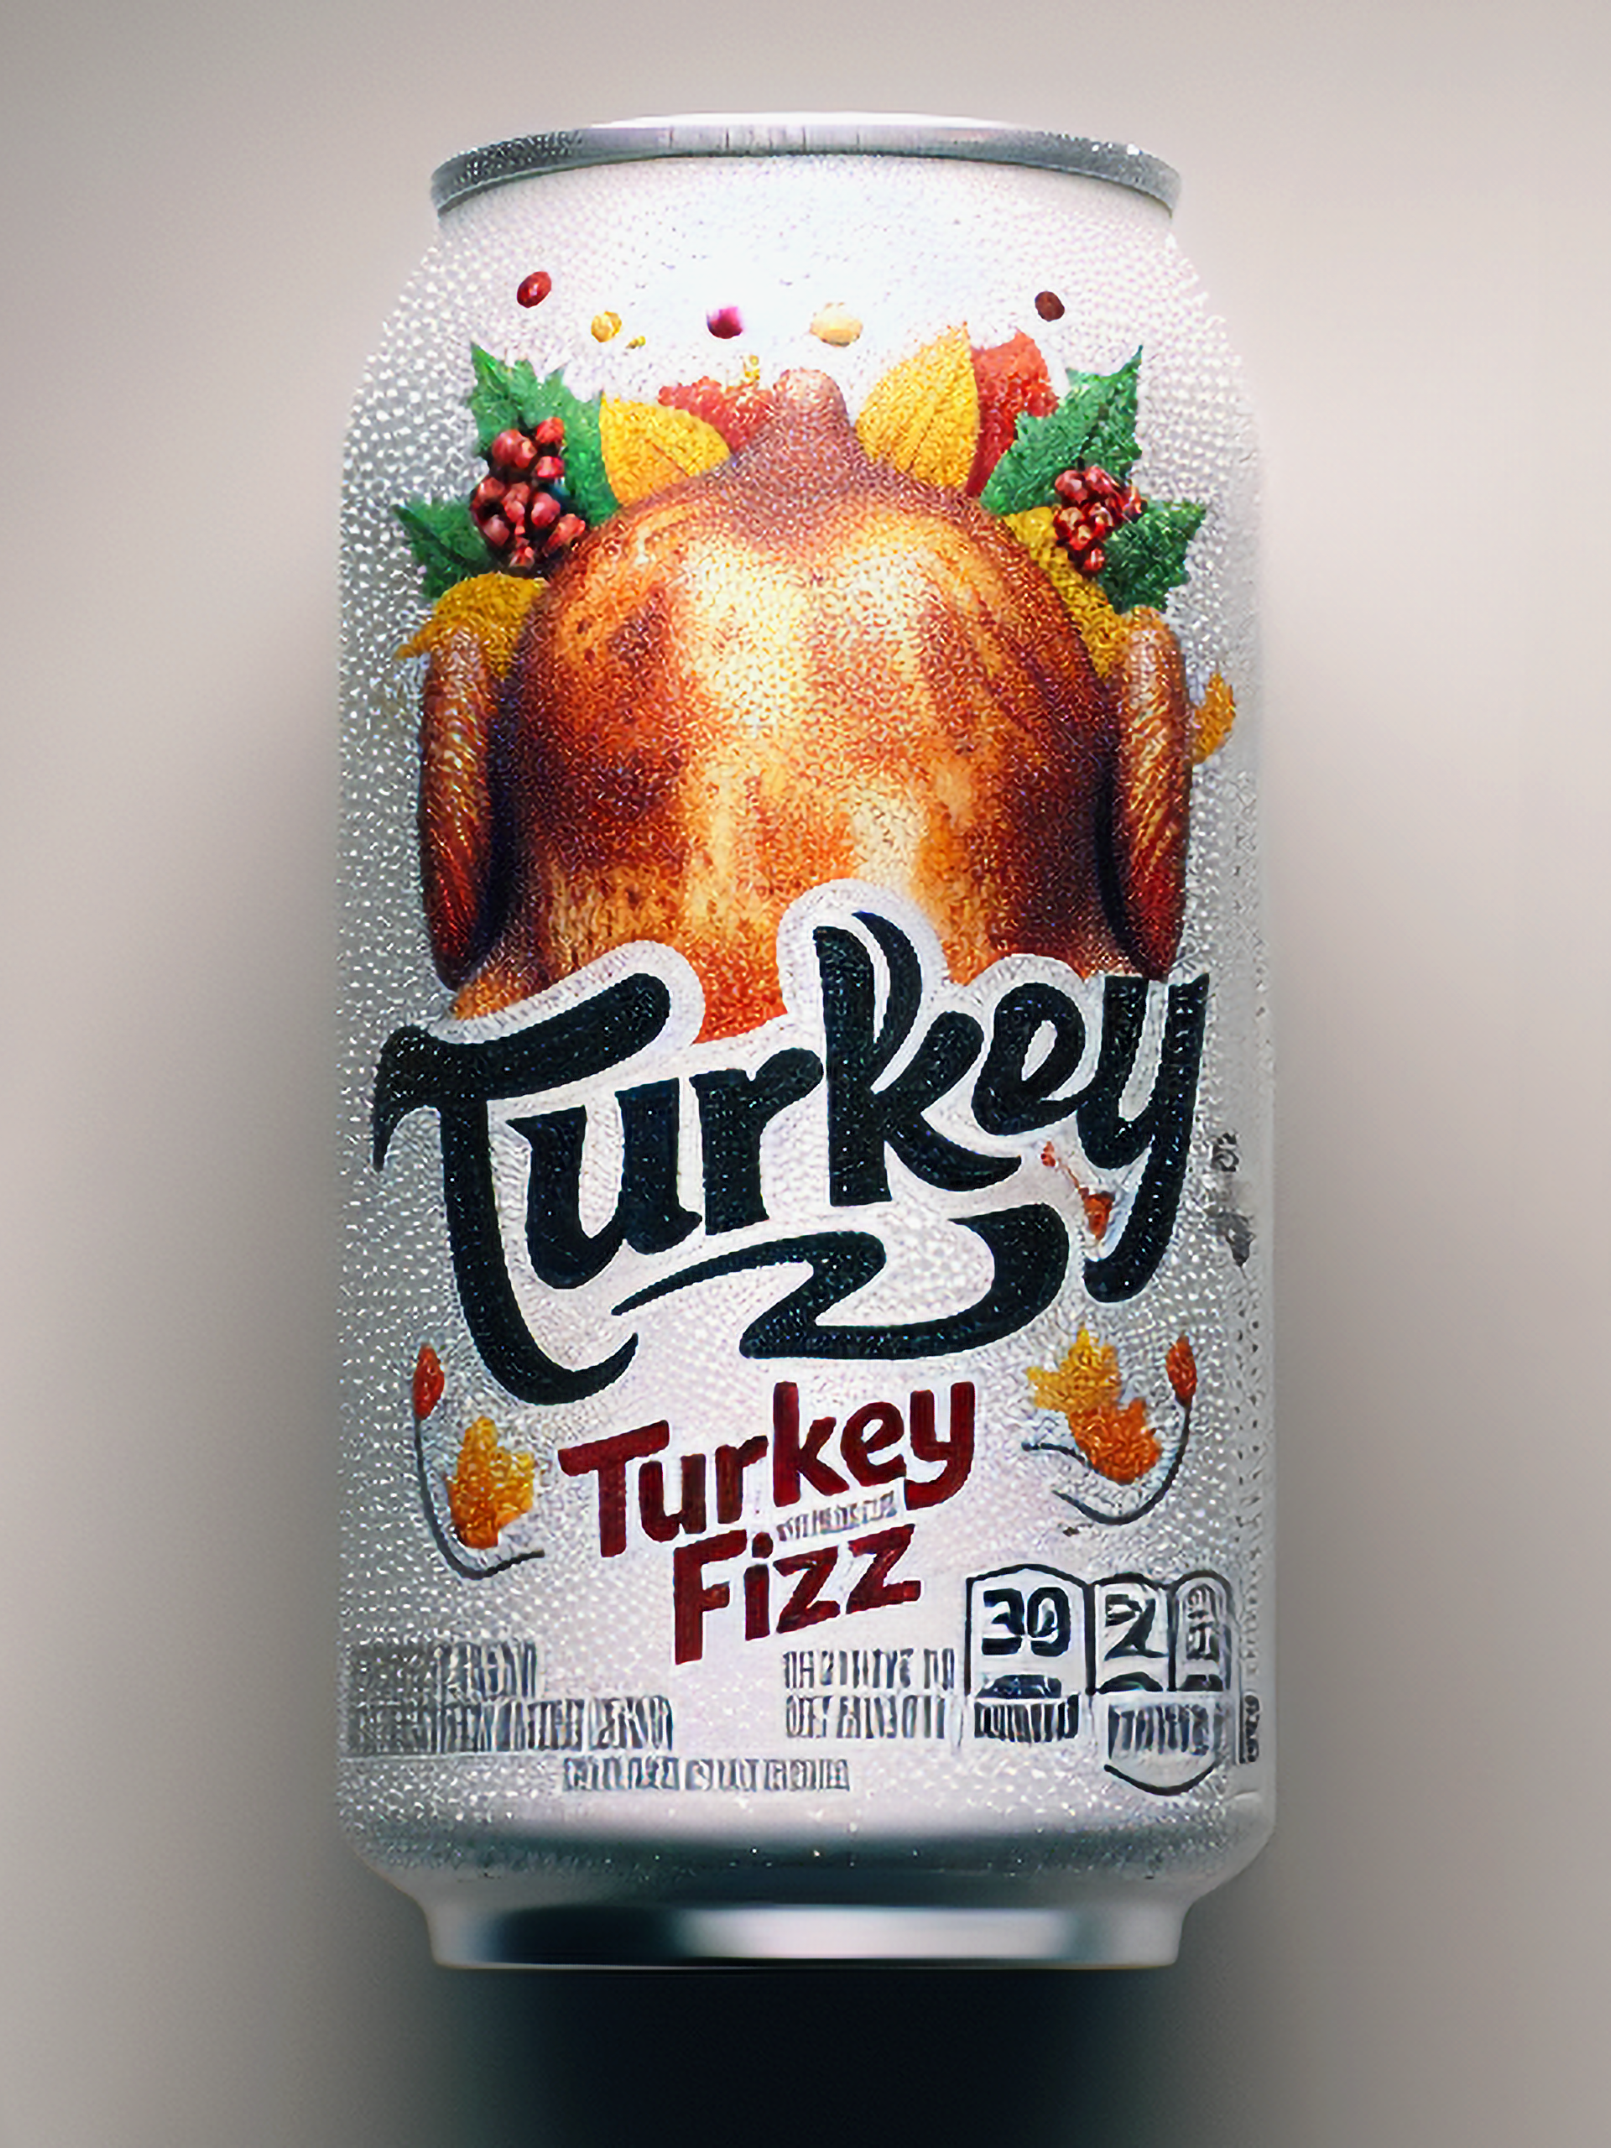 Entry #37 of a Turkey